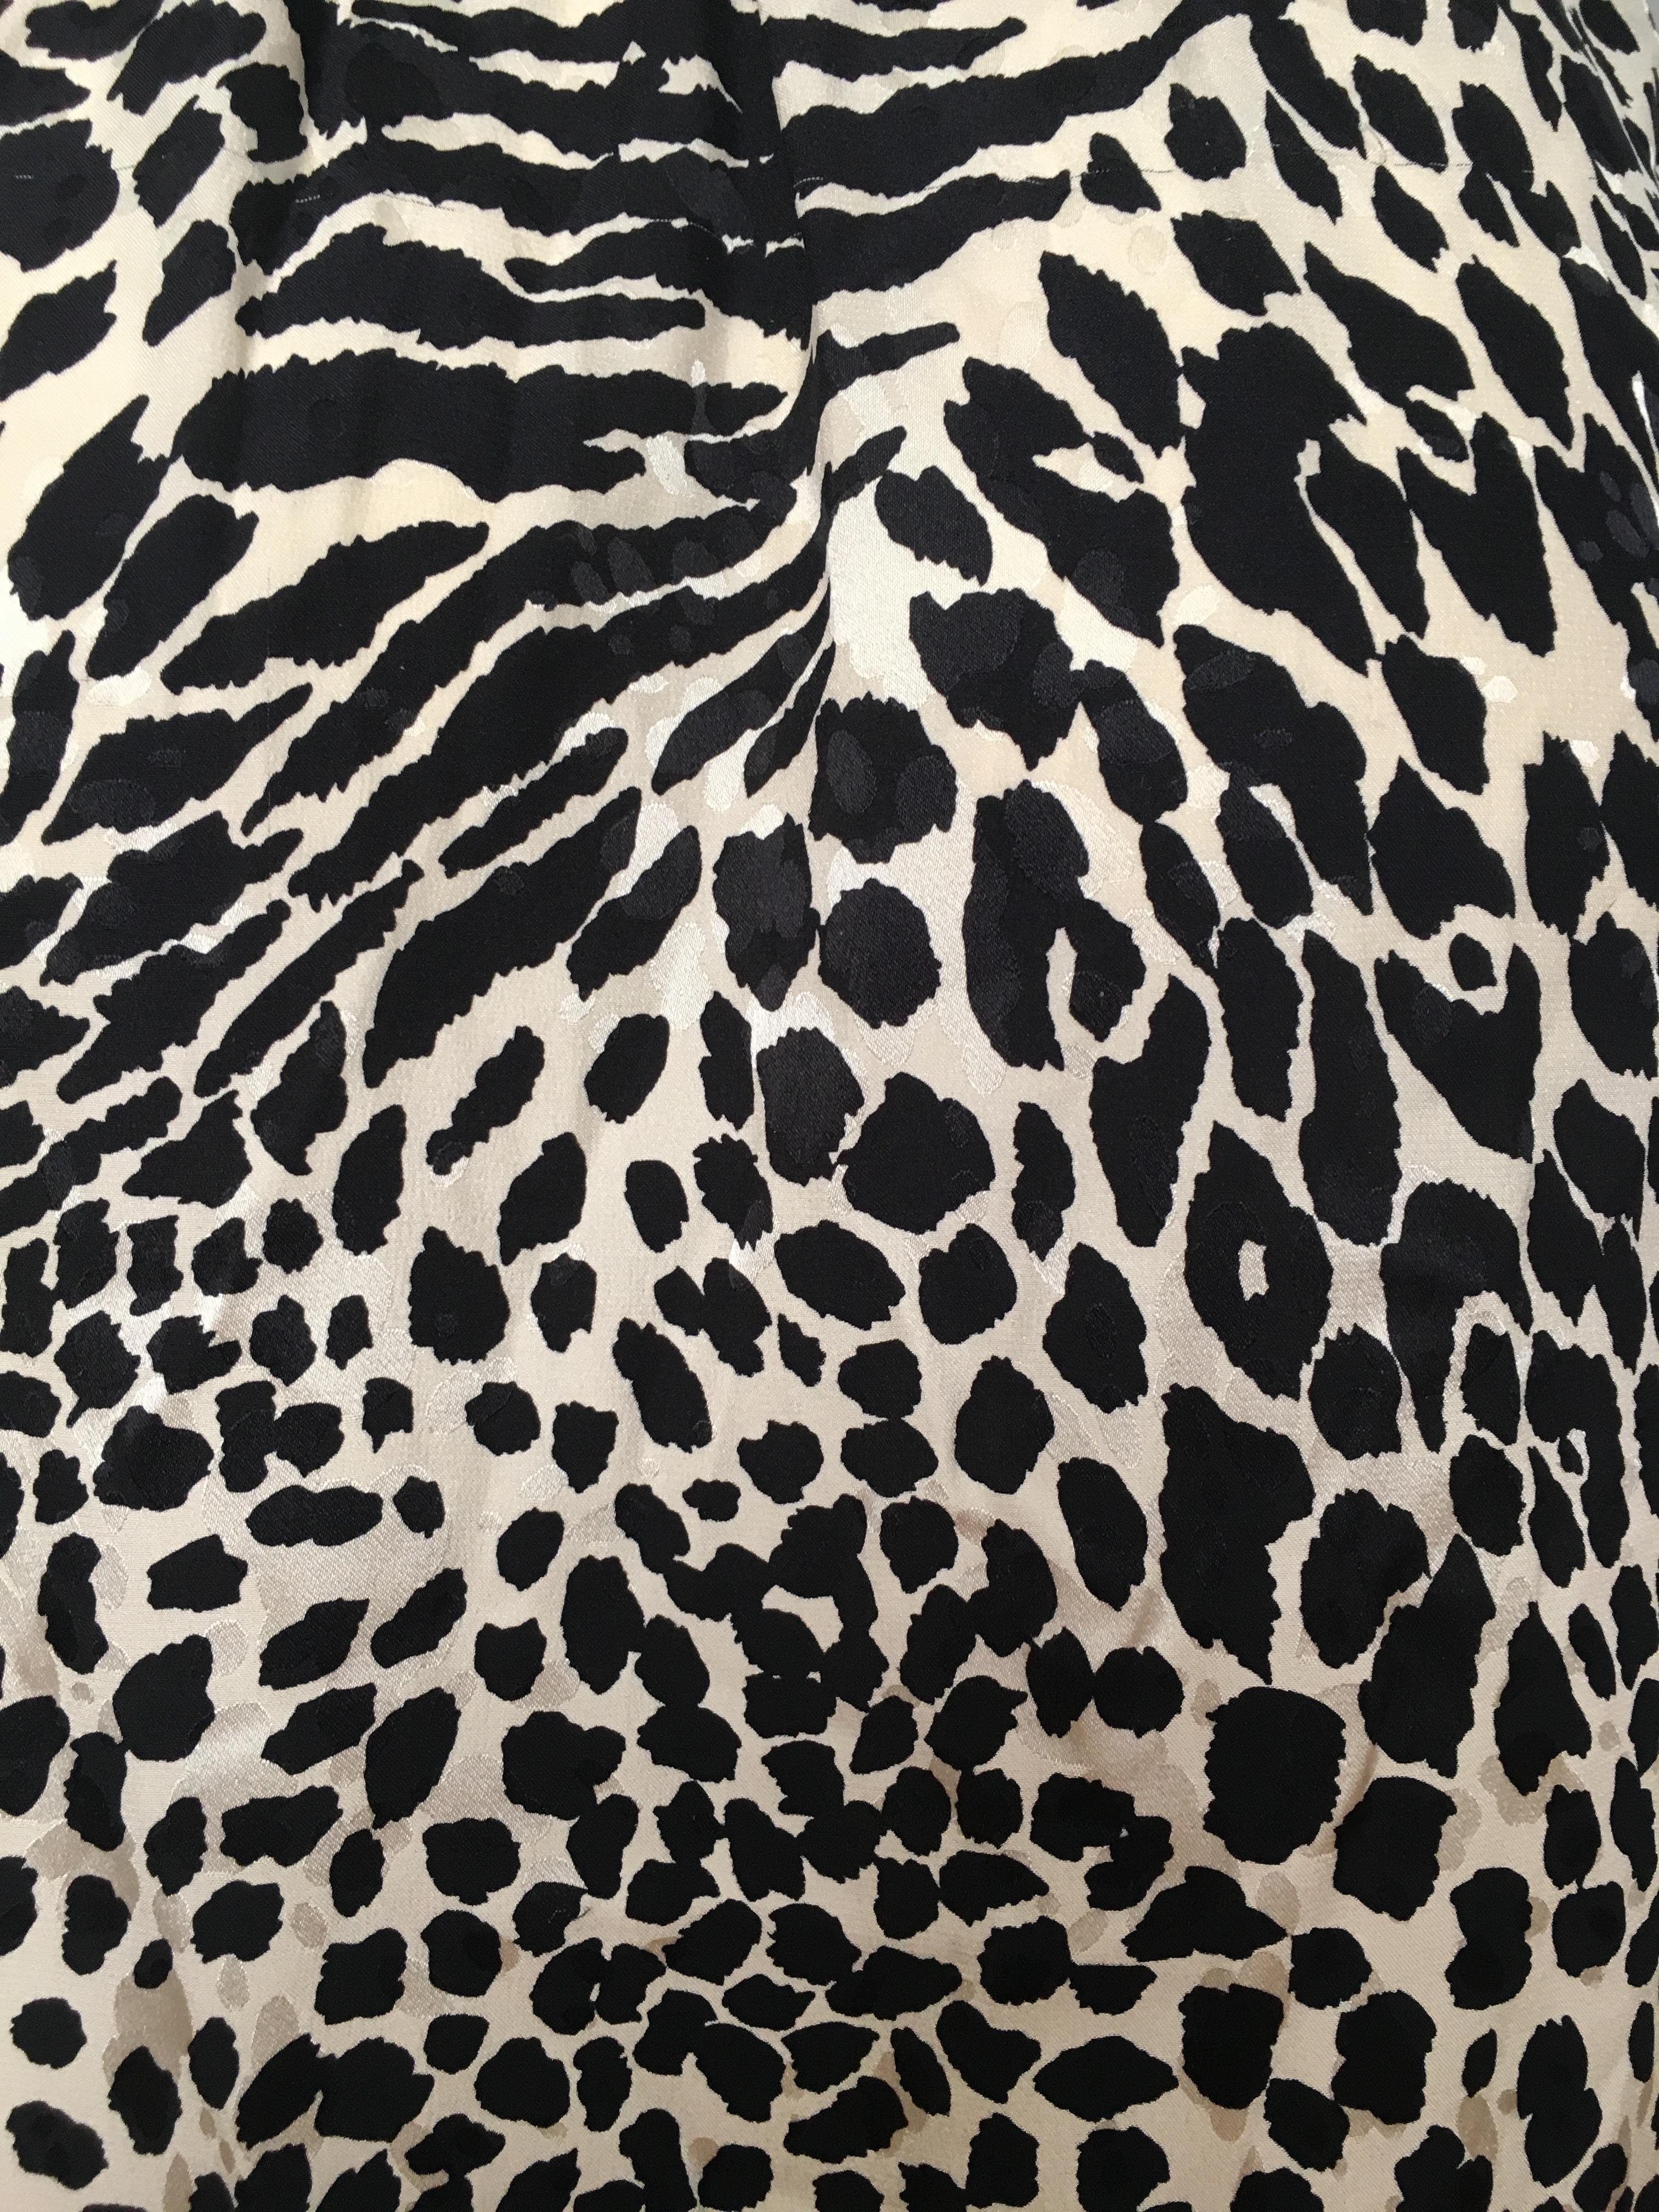 Geoffrey Beene for Lillie Rubin 1980 Animal Print Silk Dress Size 6. For Sale 7